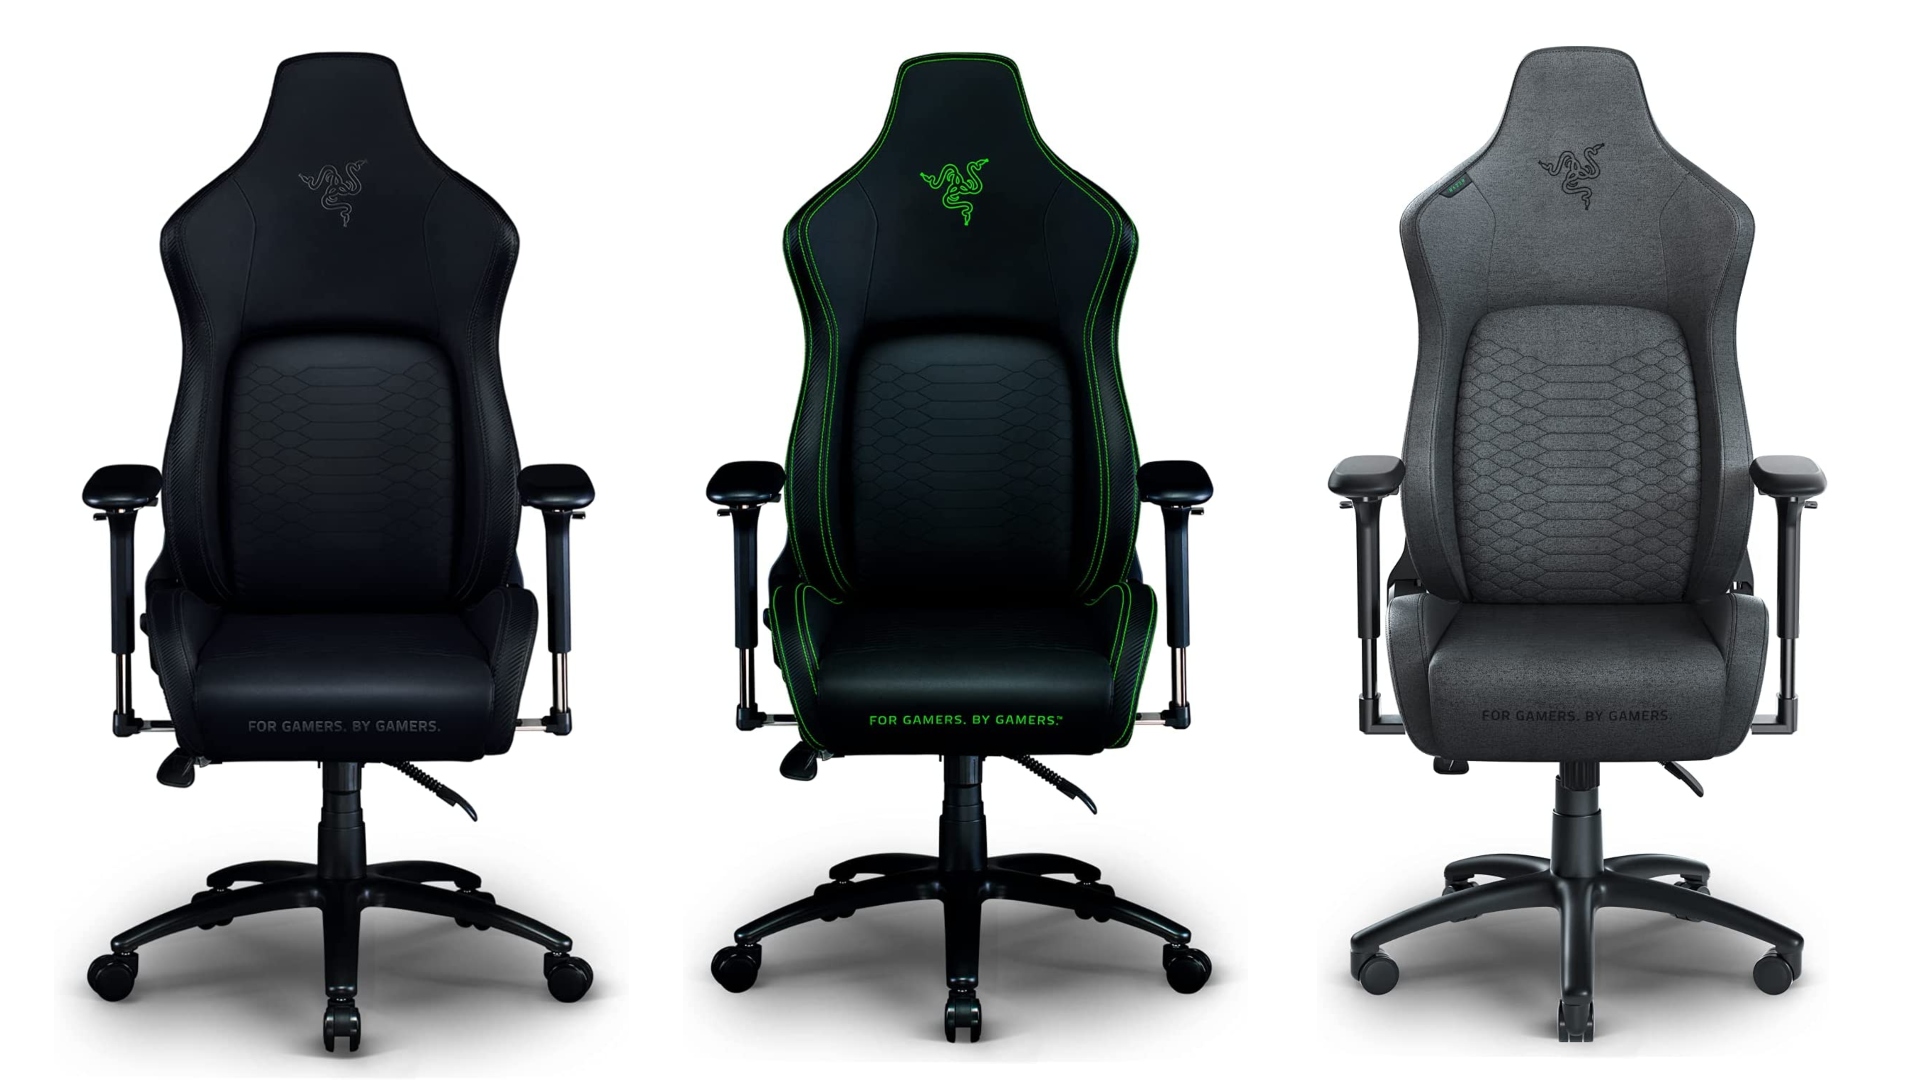 Best Amazon gaming chairs: Razer Iskur. Image shows three Razer Iskur chairs in three colours.